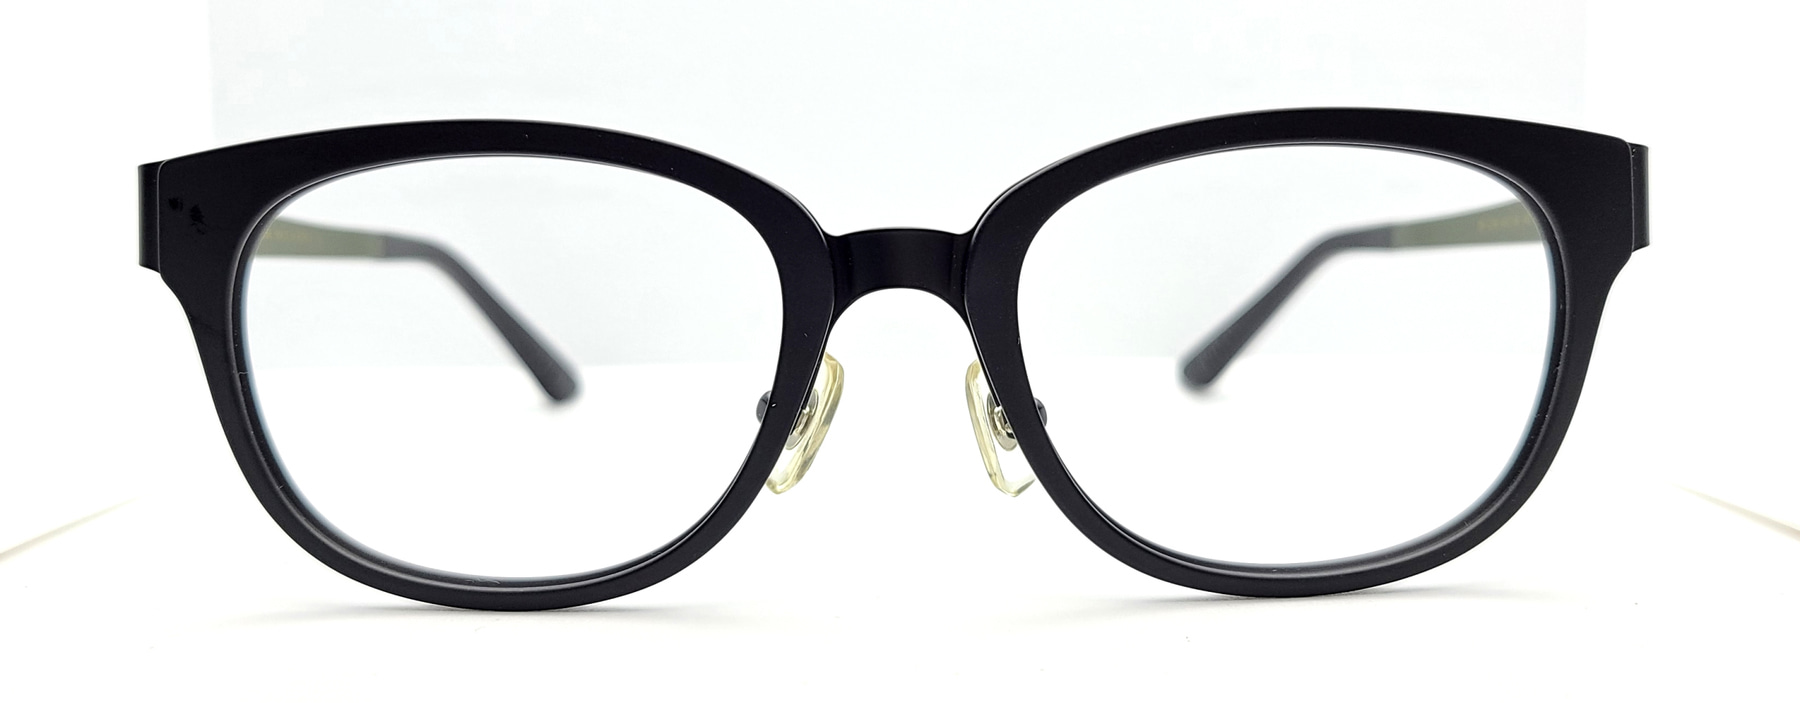 MINIHOUSE M-1284, Korean glasses, sunglasses, eyeglasses, glasses